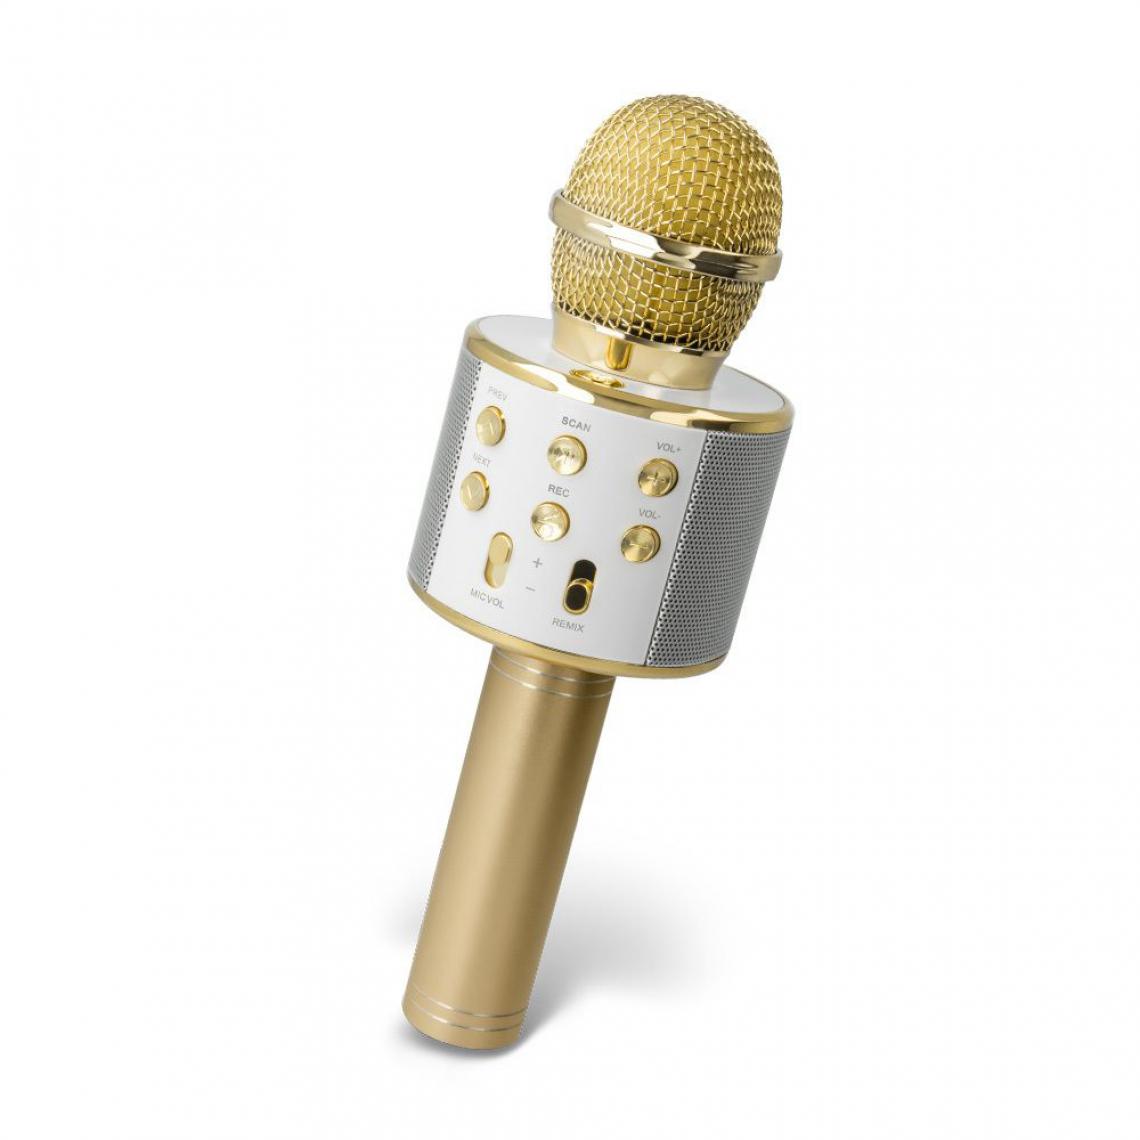 Ozzzo - Microphone Karaoke bluetooth haut parleur ozzzo Gold Or pour Elephone U5 - Autres accessoires smartphone